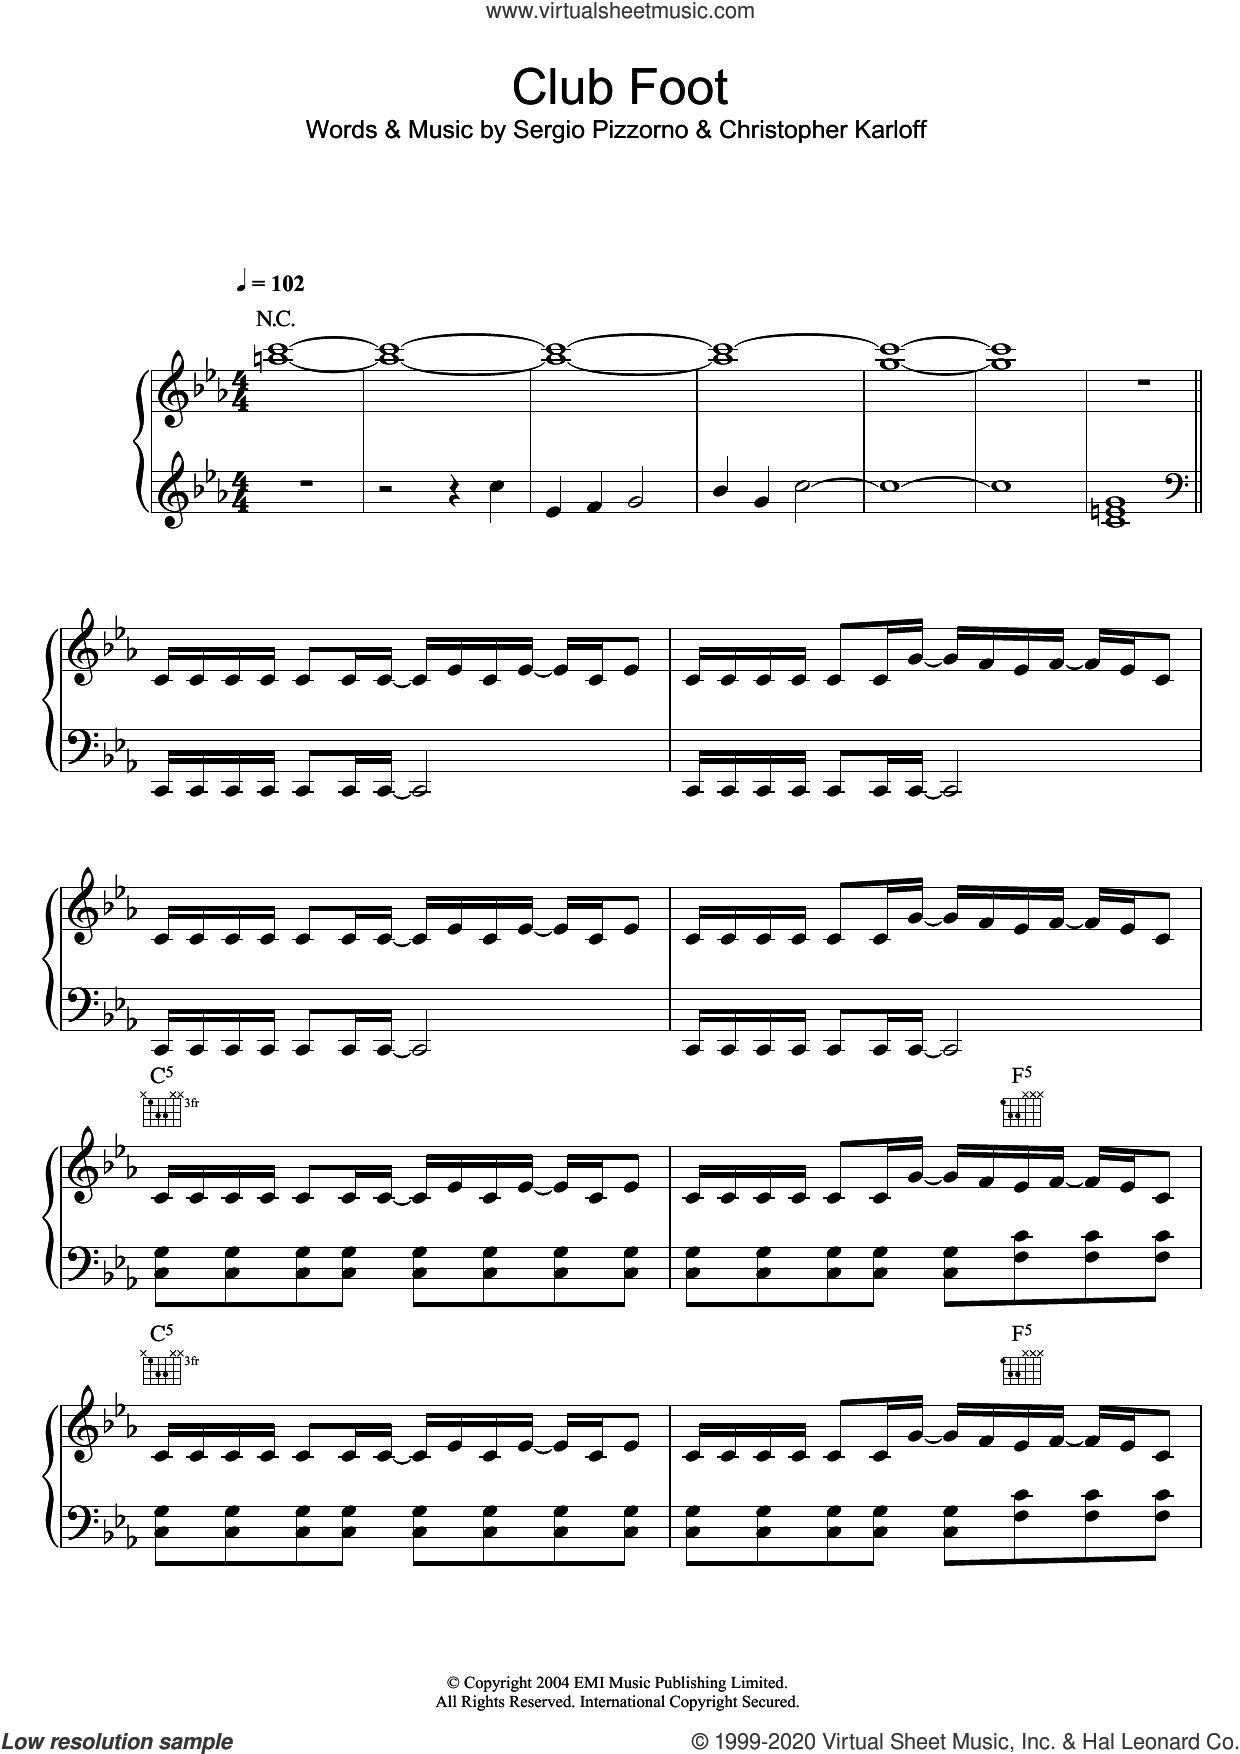 Kasabian - Club Foot sheet music for voice, piano or guitar (PDF)